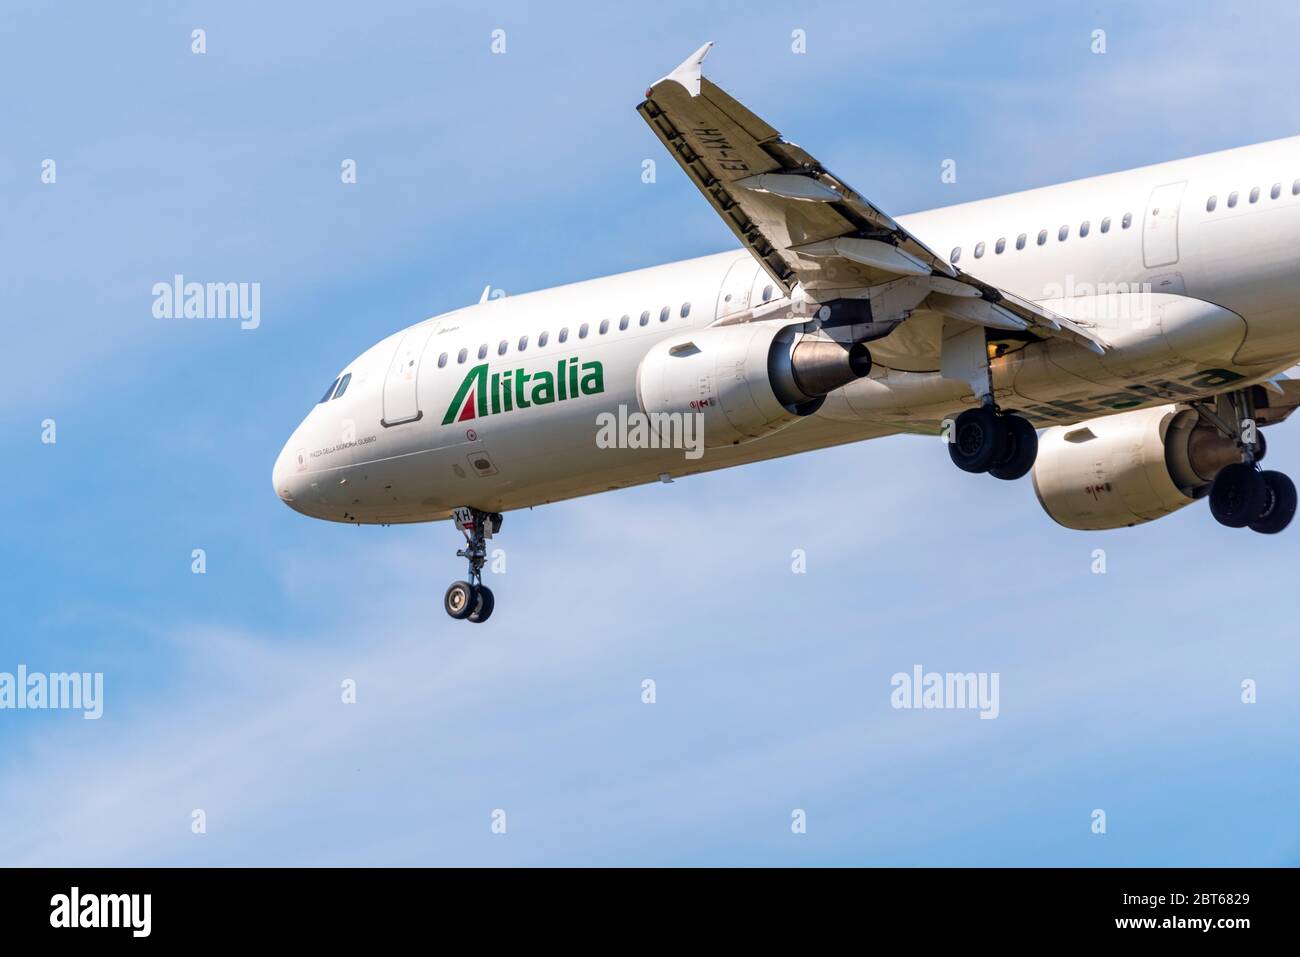 Alitalia Airbus A321 jet airliner plane landing at London Heathrow Airport over Cranford, London, UK. Named piazza della signoria gubbio Stock Photo